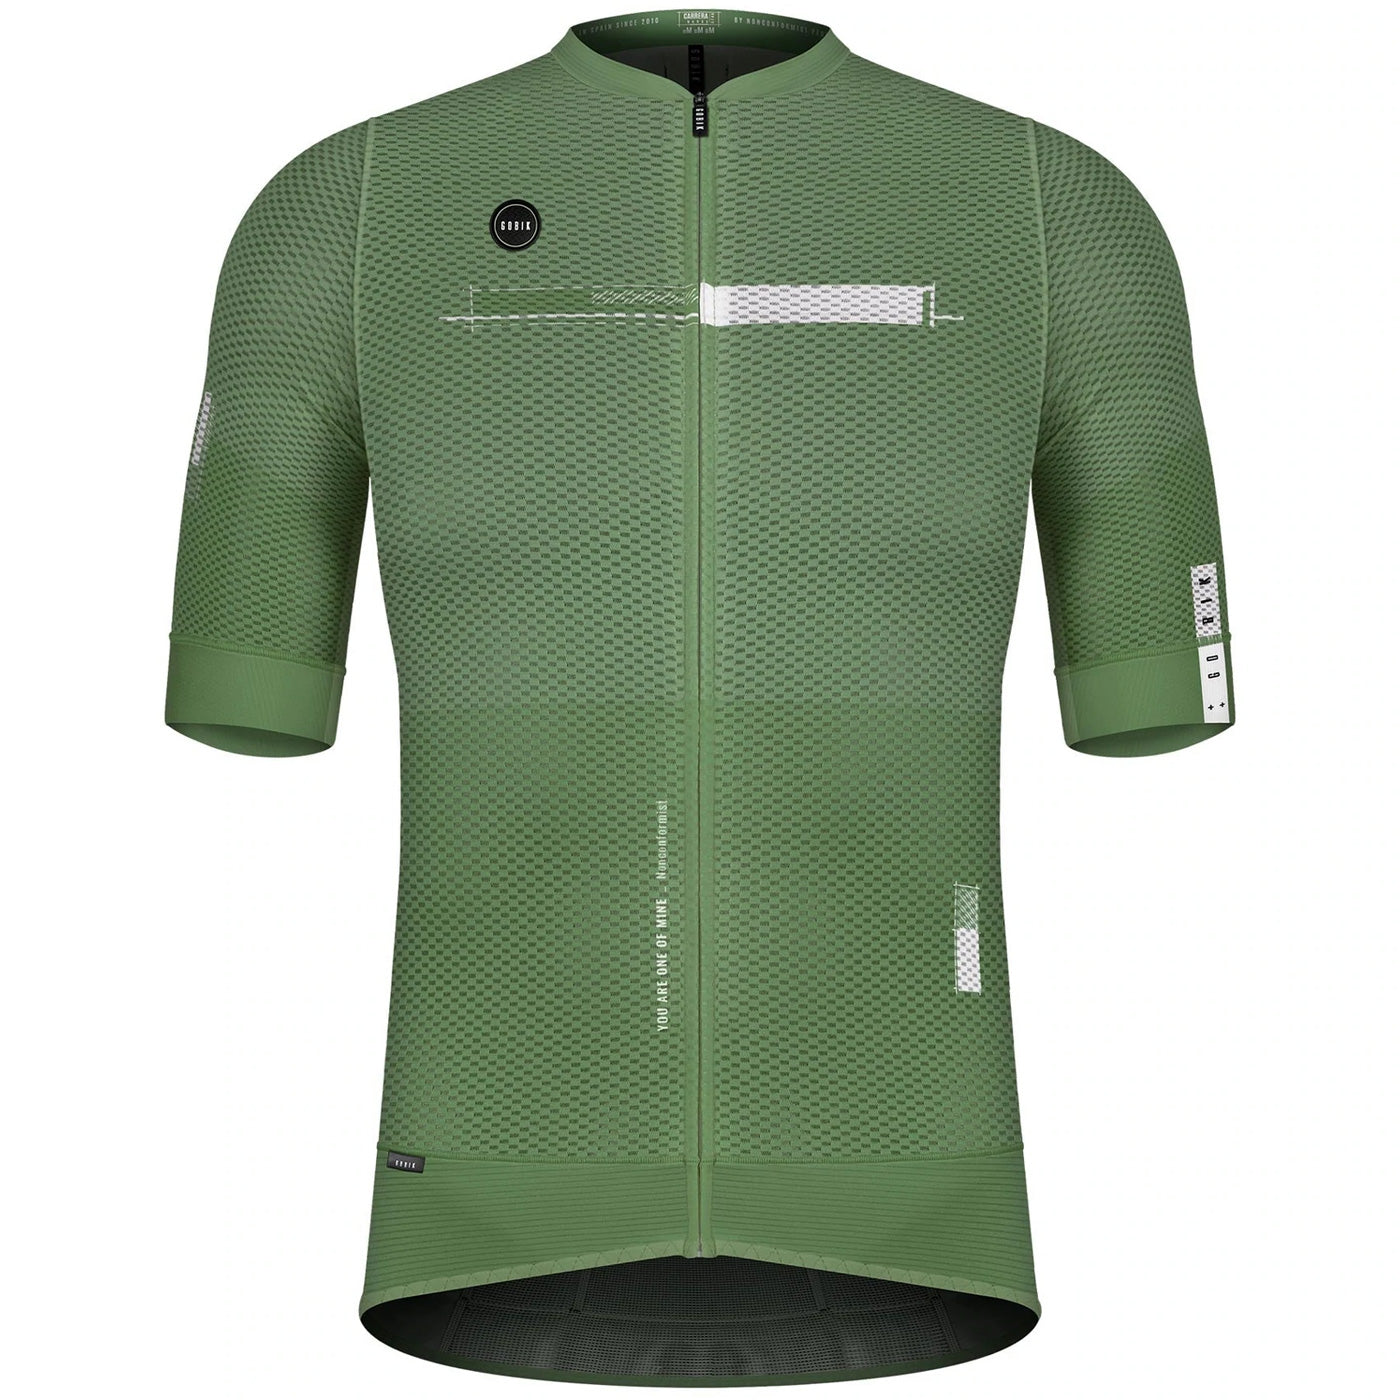 Gobik Carrera 2.0 jersey - Green | All4cycling